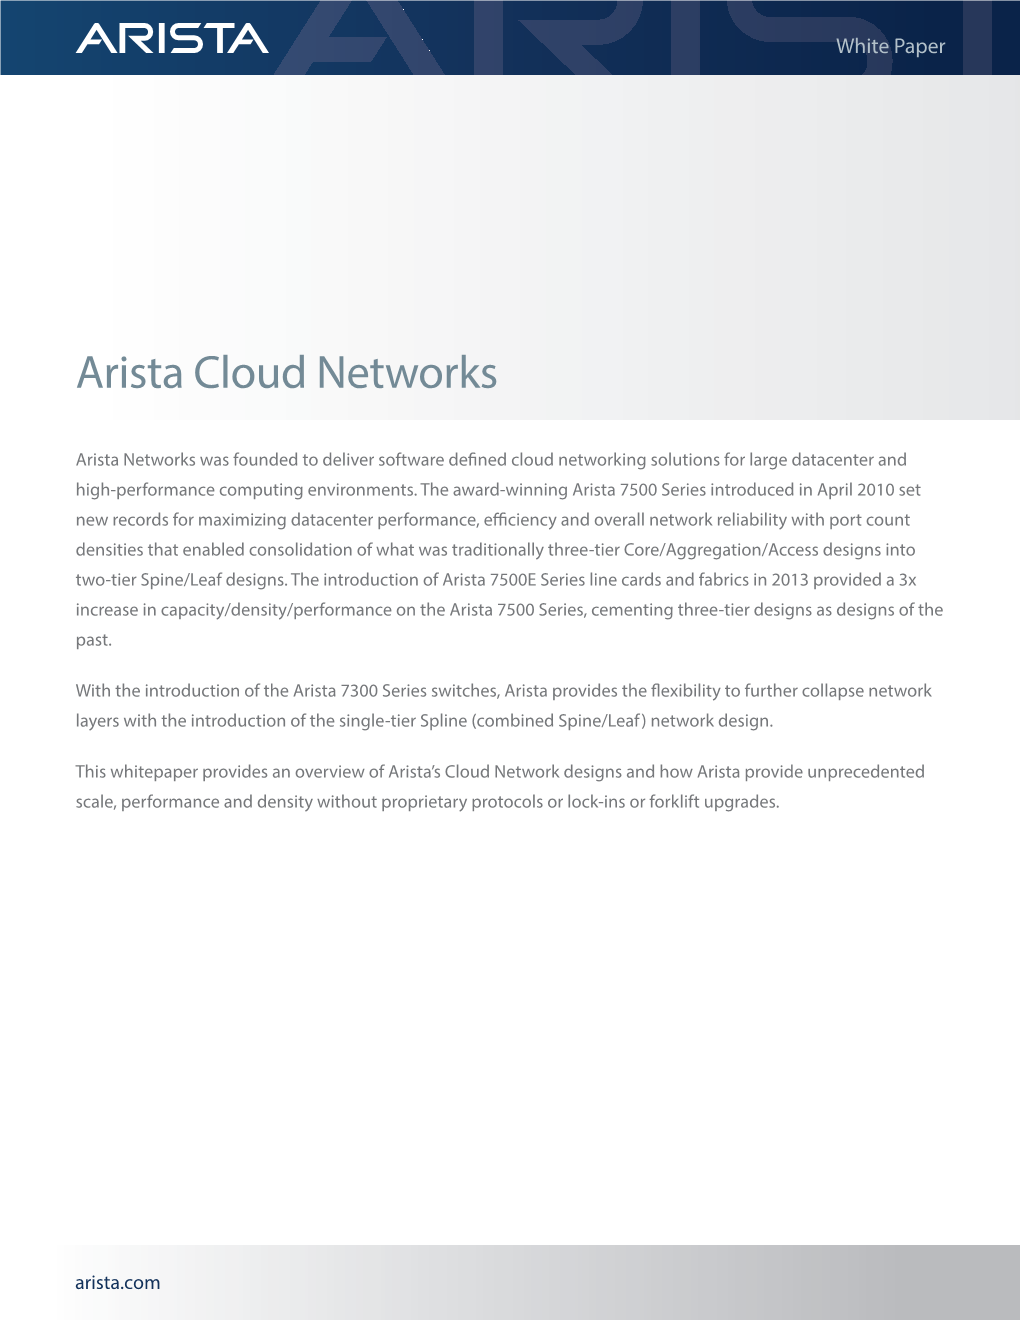 Arista Cloud Networks